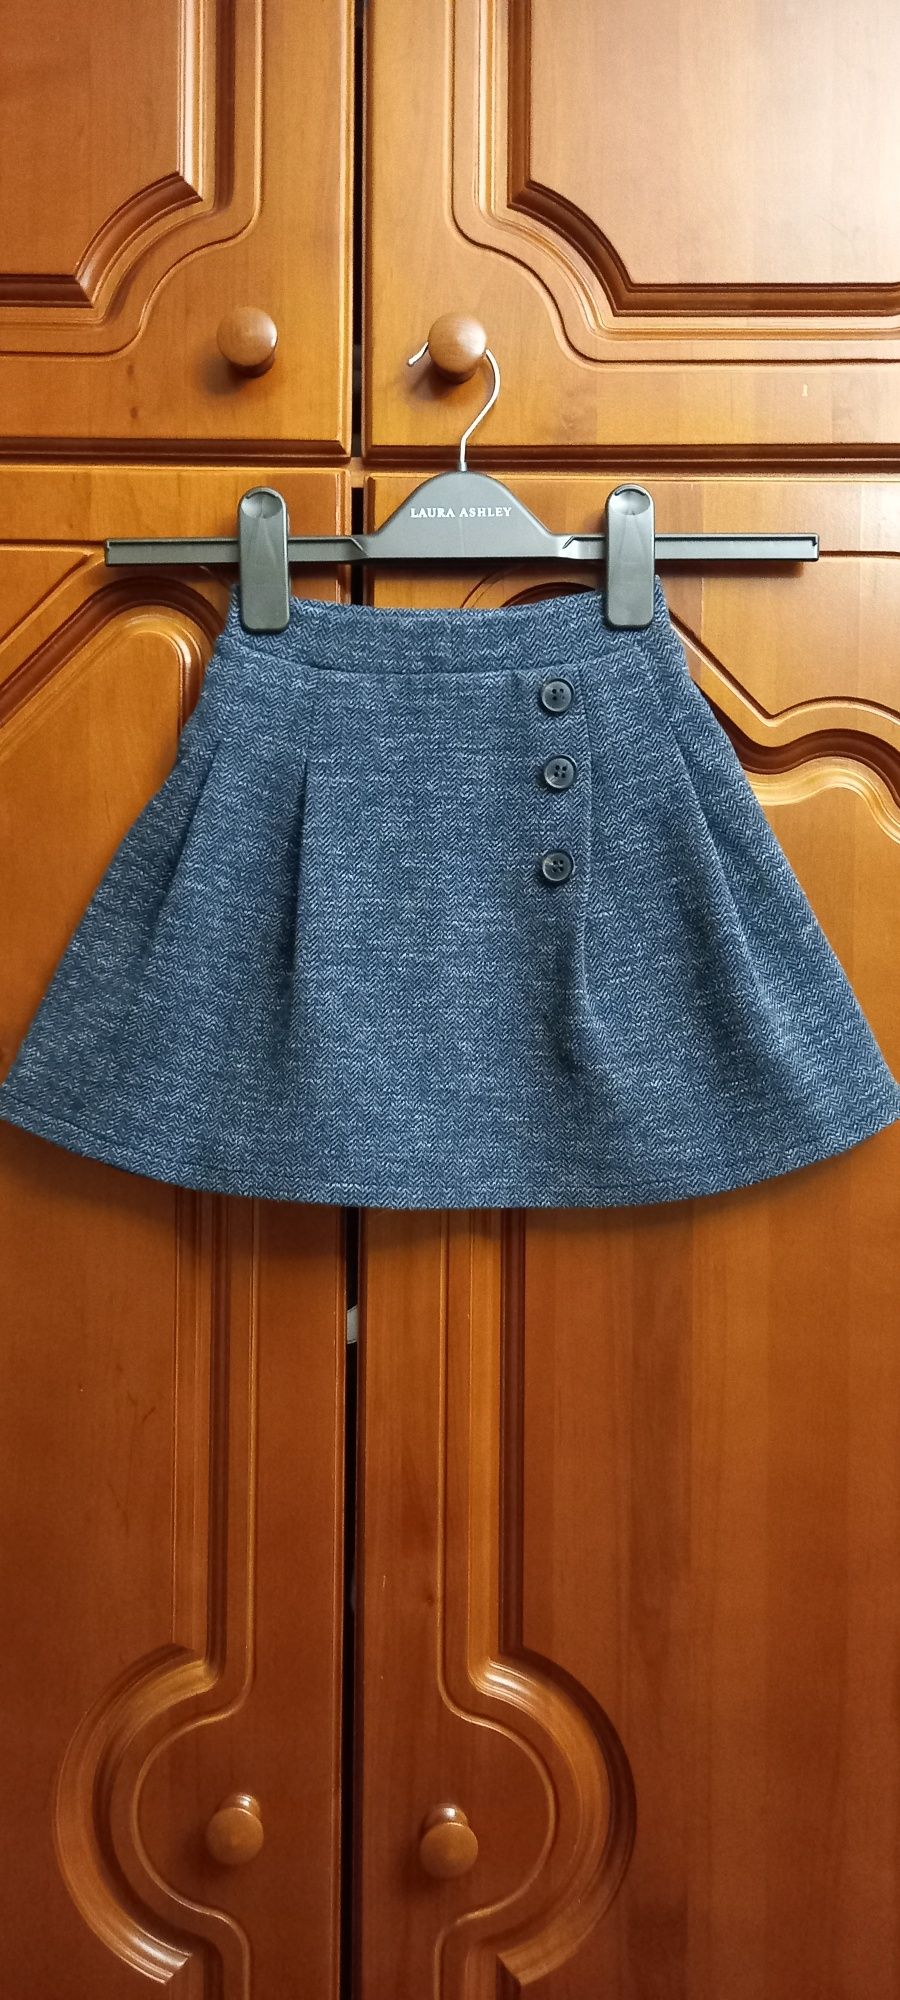 Симпатичная трикотажная юбка на девочку серого меланж цвета, р.116-122